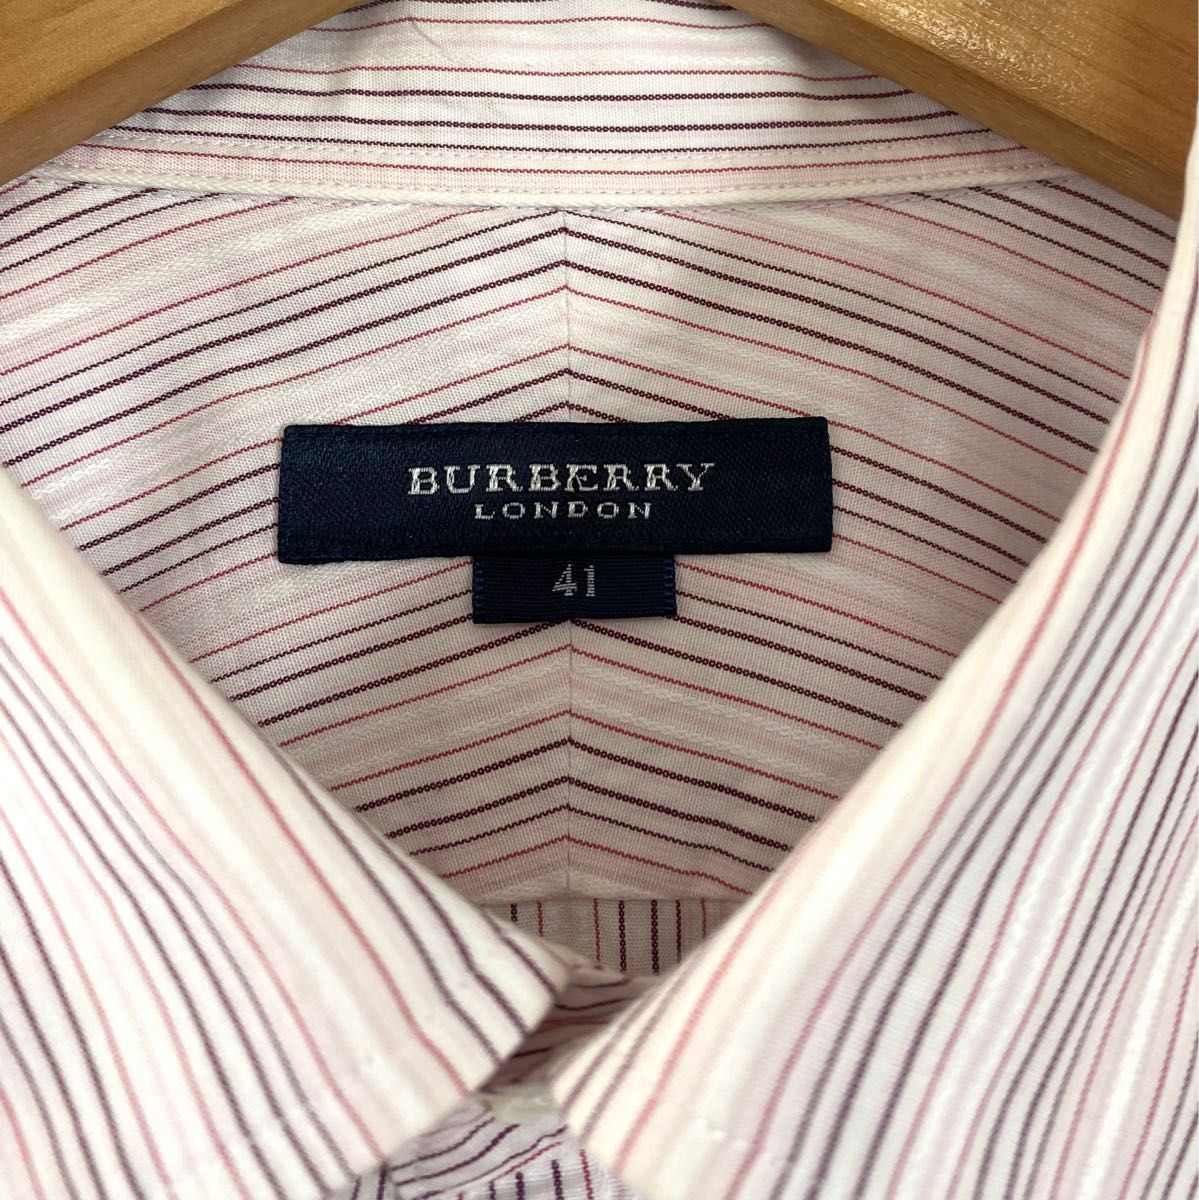 BURBERRY LONDONバーバリーロンドン ロゴ刺繍 半袖ボタンダウン ストライプシャツ ピンク系 41 XL相当